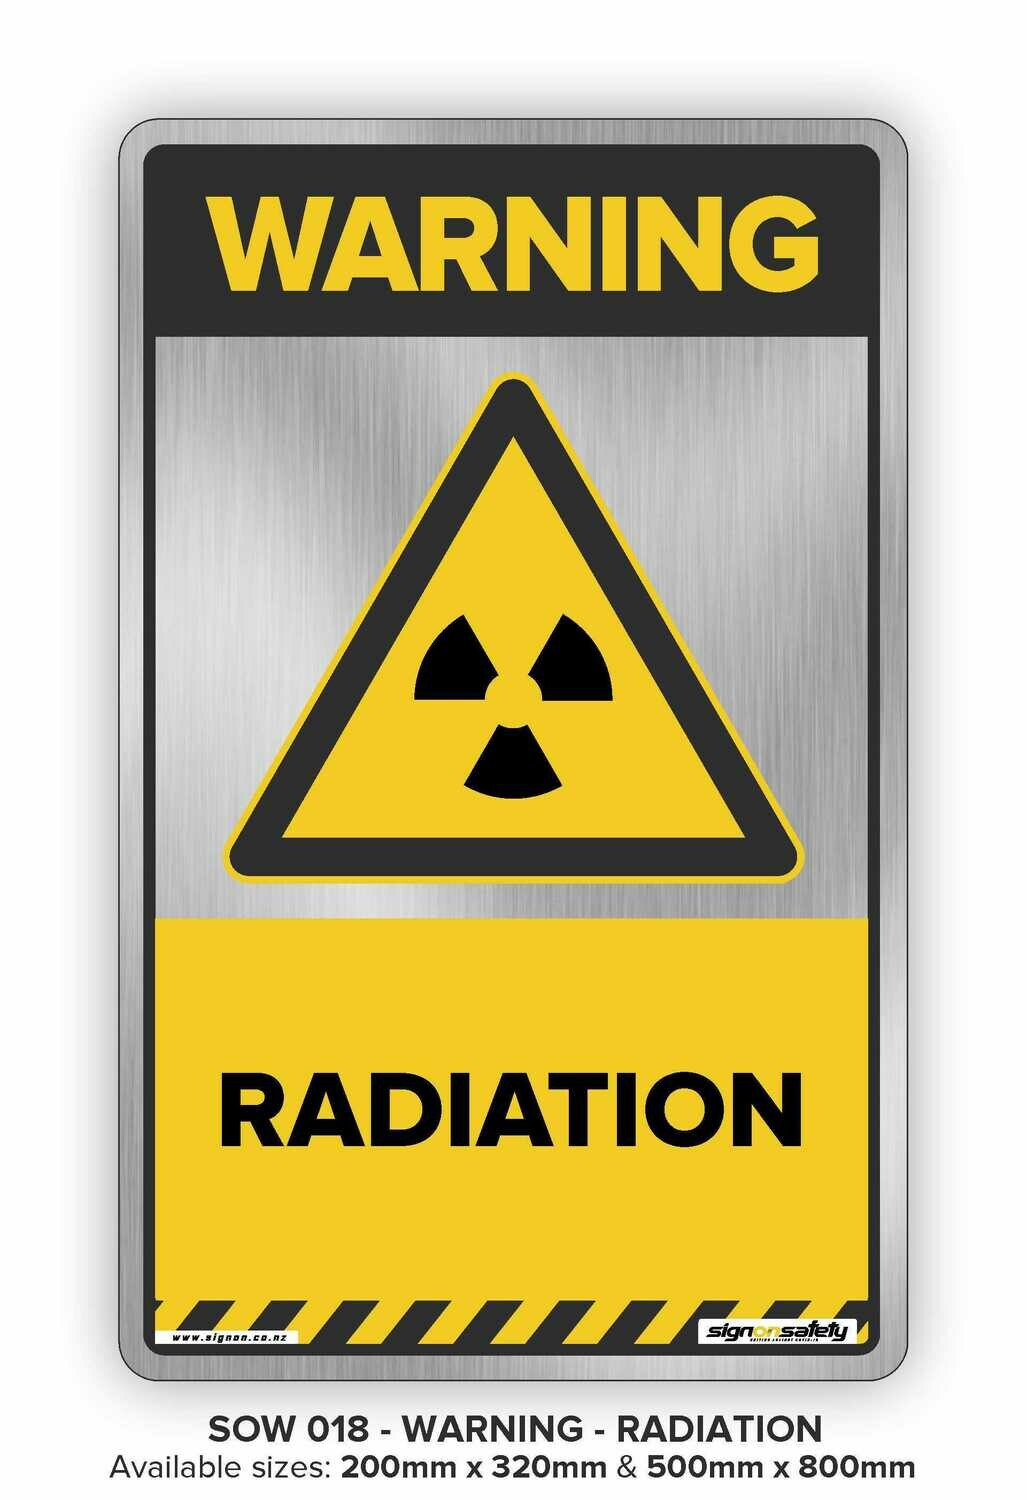 Warning - Radiation